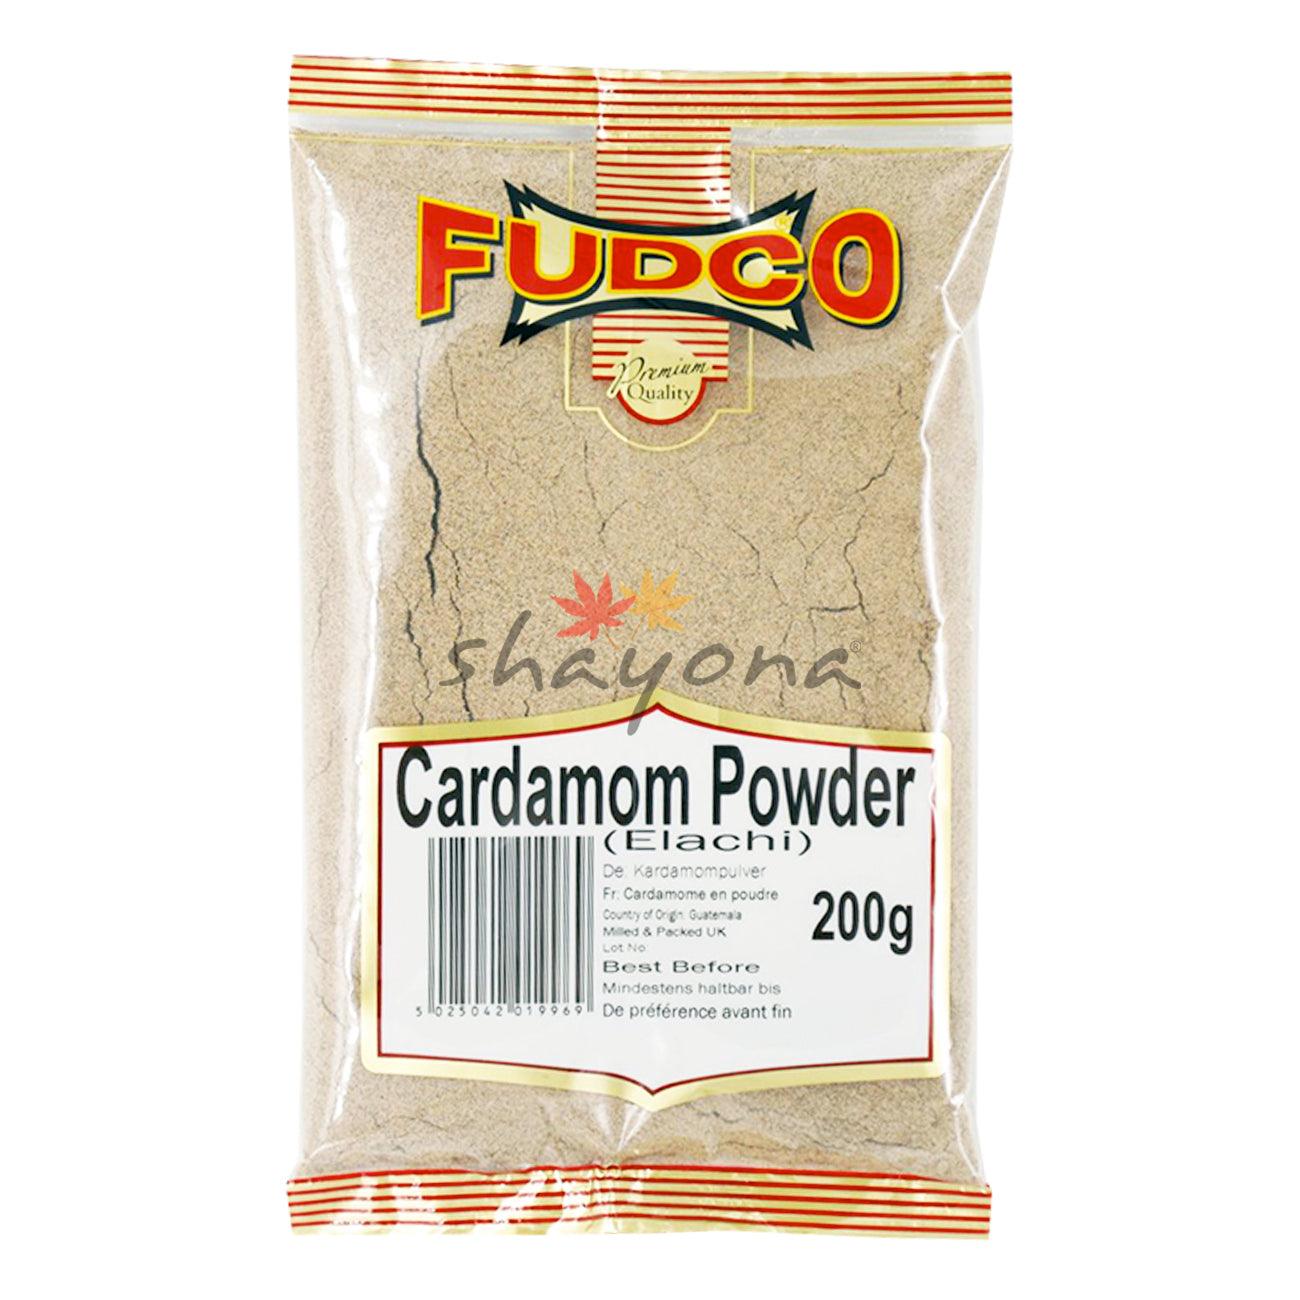 Fudco Cardamom Powder - Shayona UK